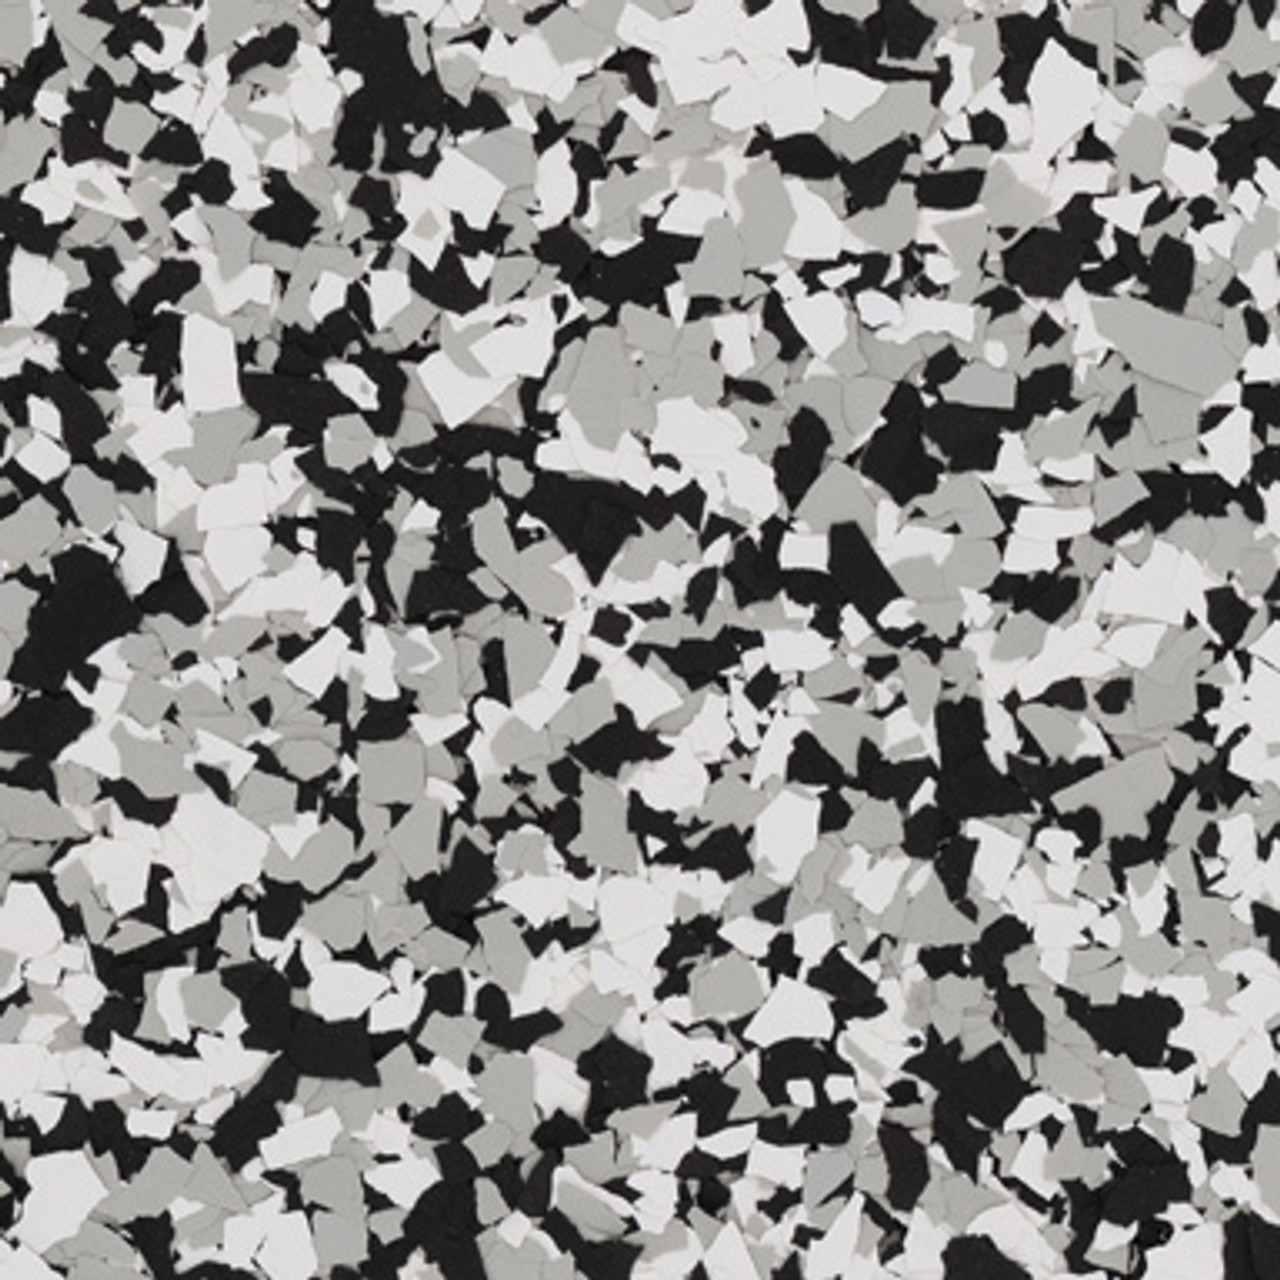 Chips - Epoxy Flake 1/4" White/Black/Gray Blend